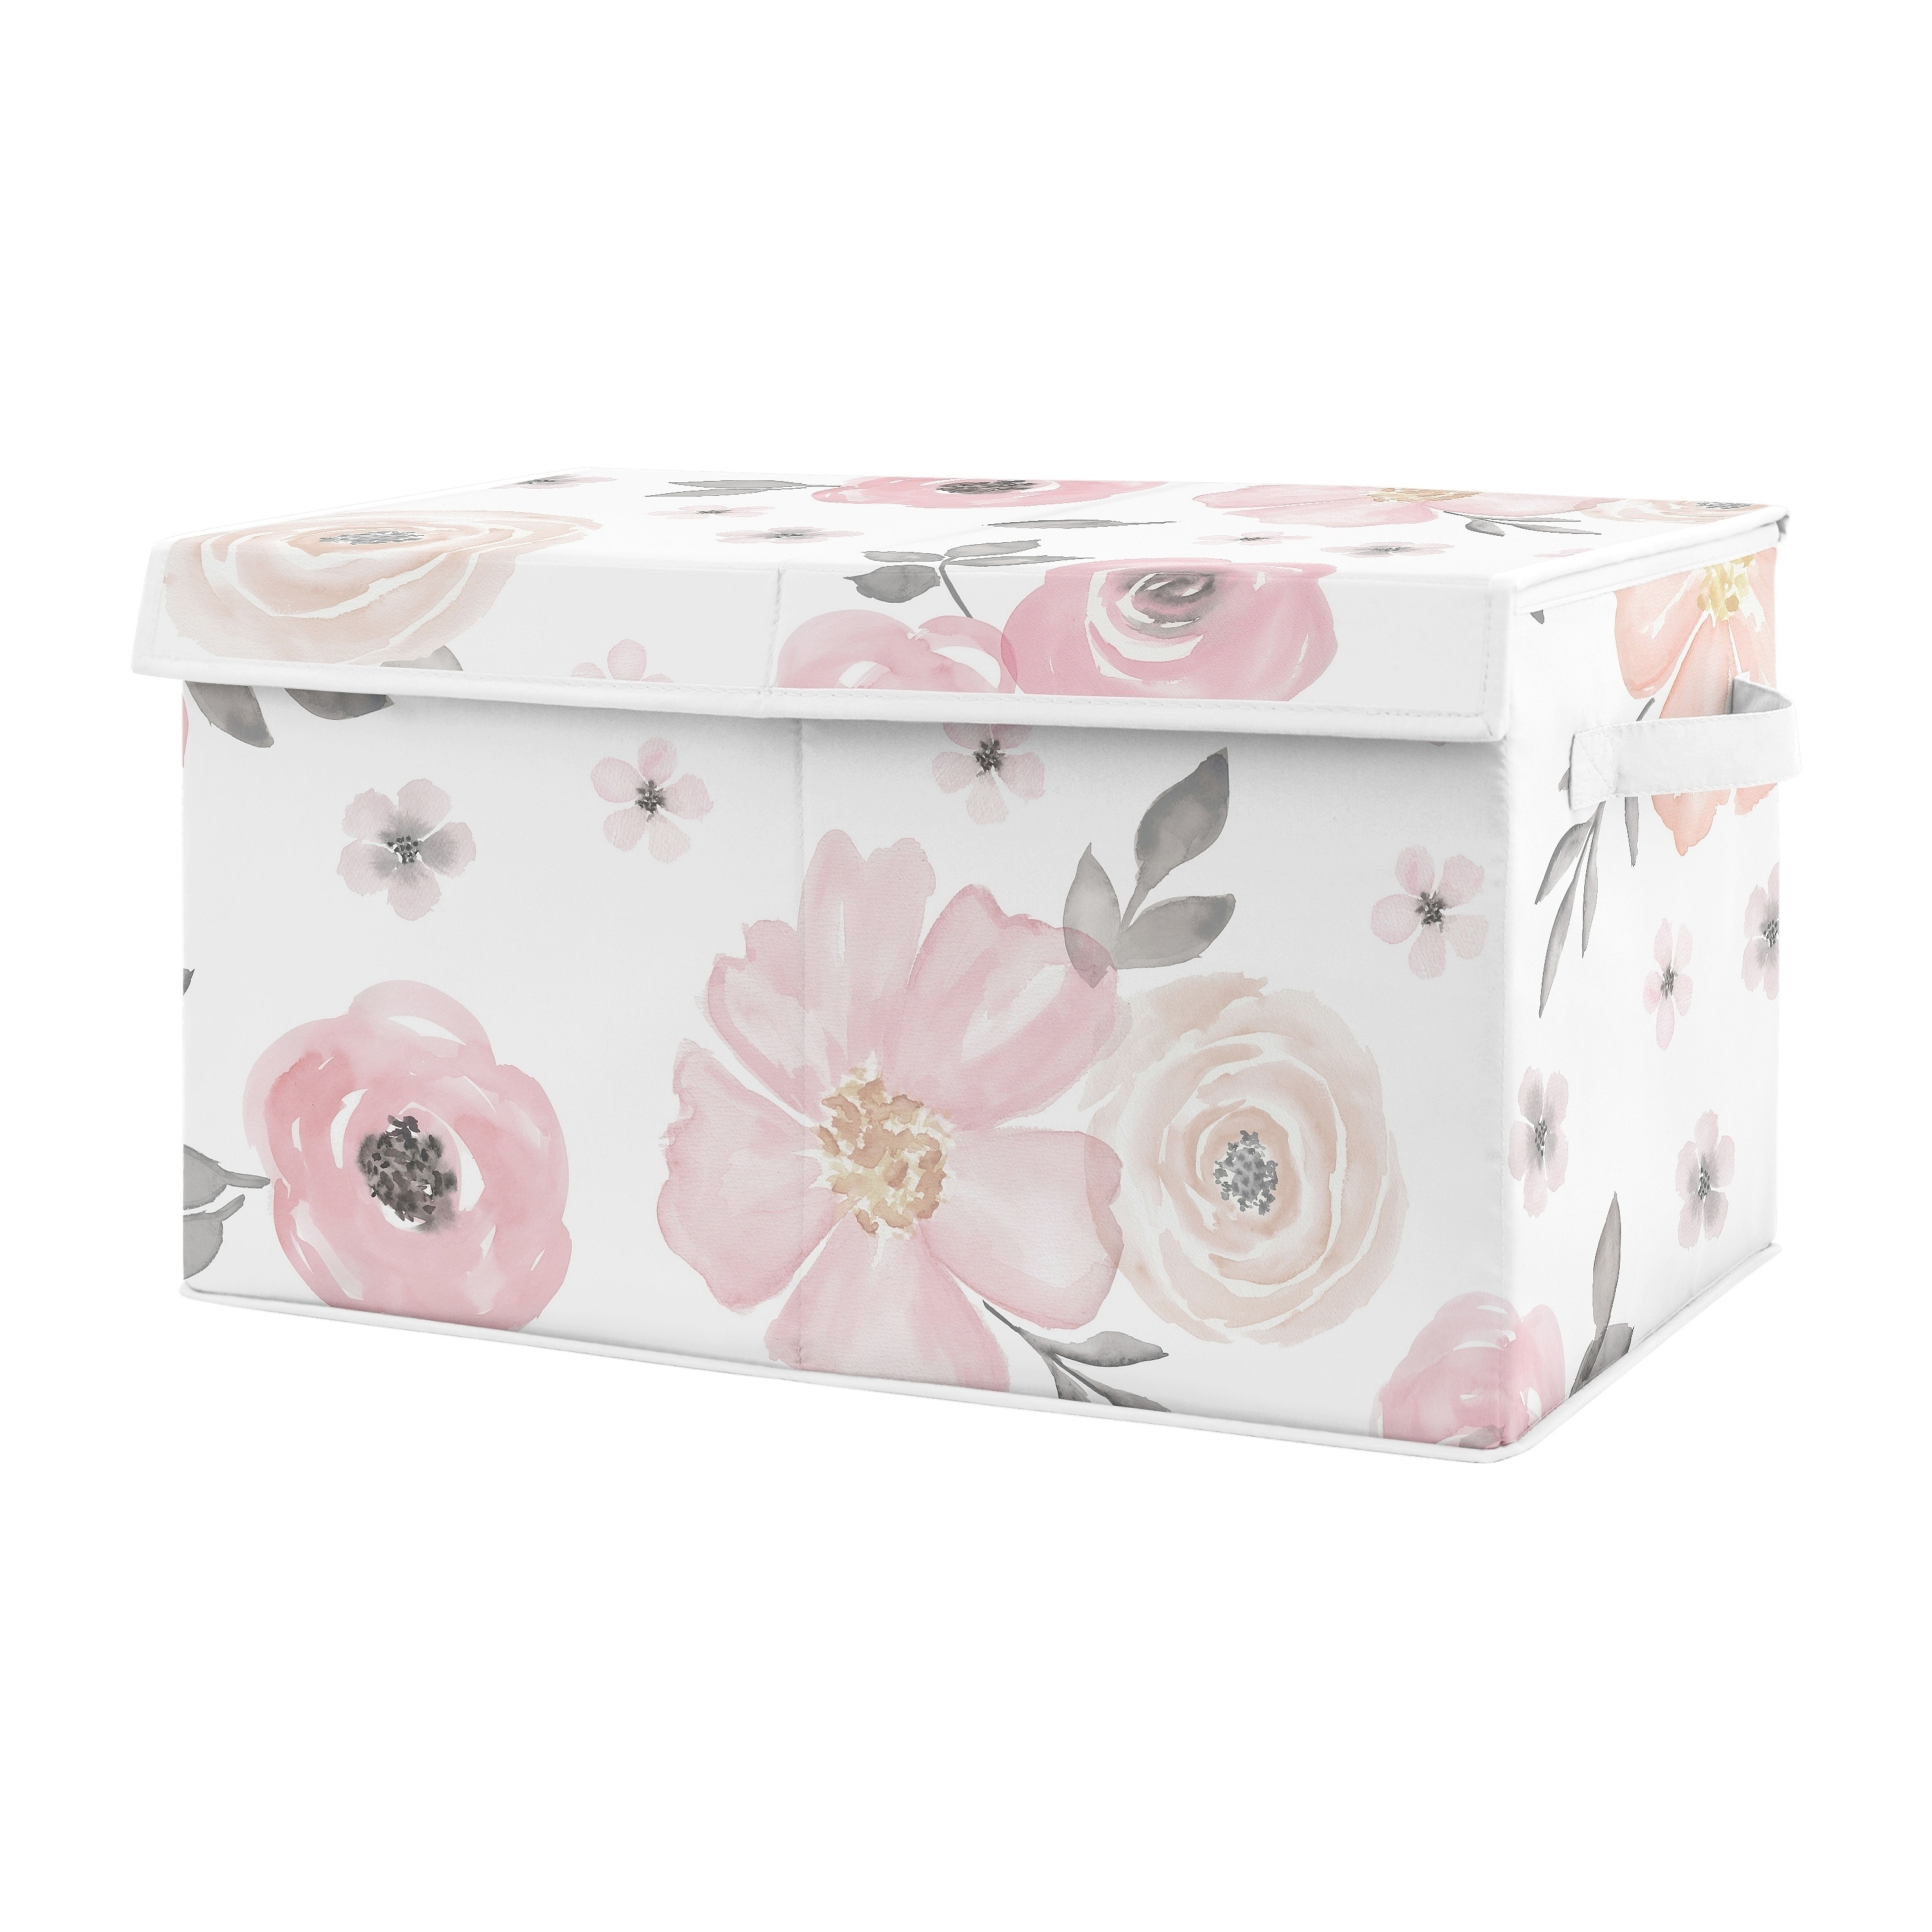 Sweet Jojo Designs Pink Flower Blossom Foldable Fabric Storage Cube Bins Boxes Organizer Toys Kids Baby Childrens - Set of 2